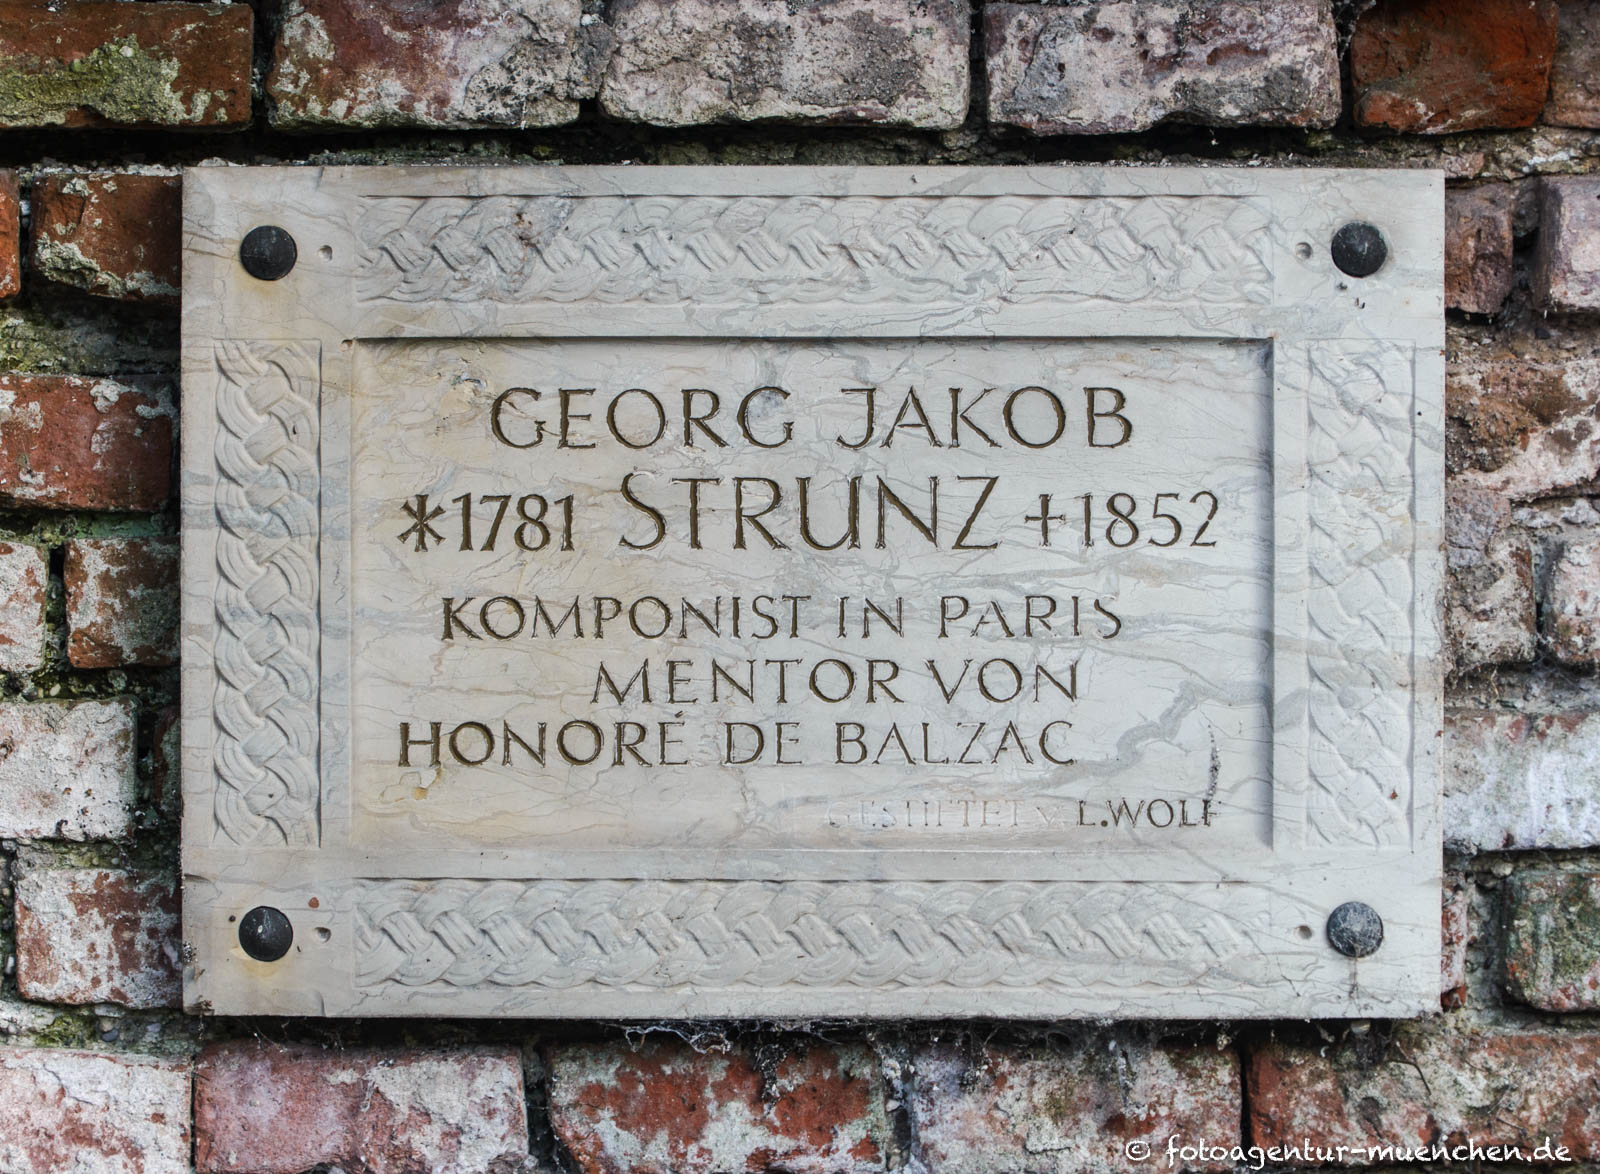 Georg Jakob Strunz